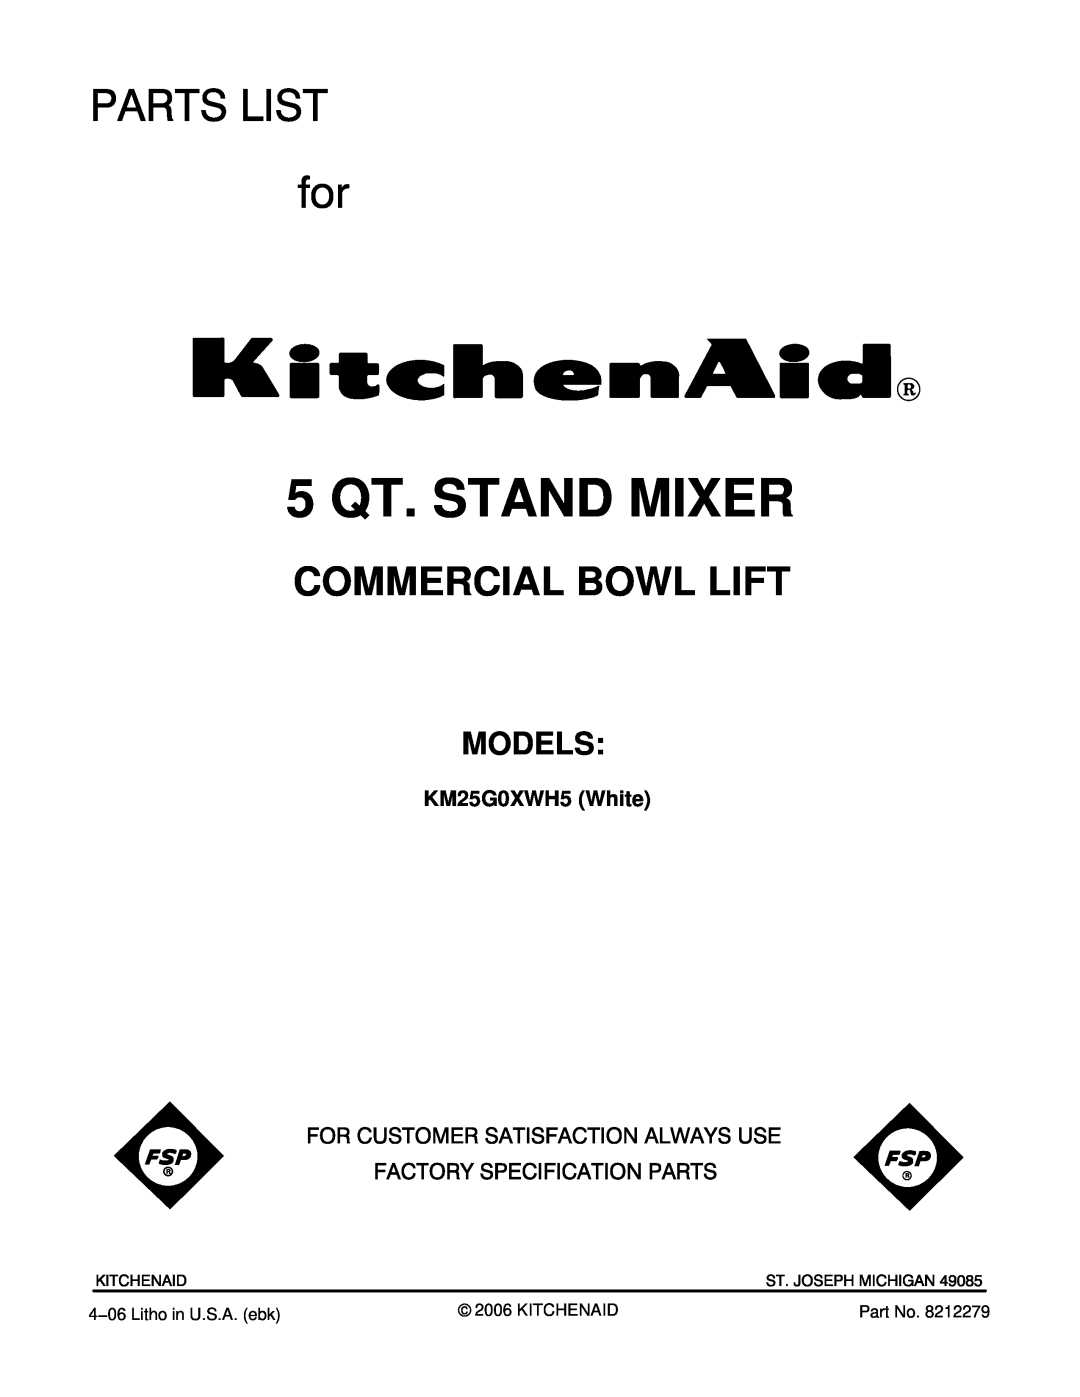 KitchenAid manual Models, KM25G0XWH5 White, 5 QT. STAND MIXER, Commercial Bowl Lift 